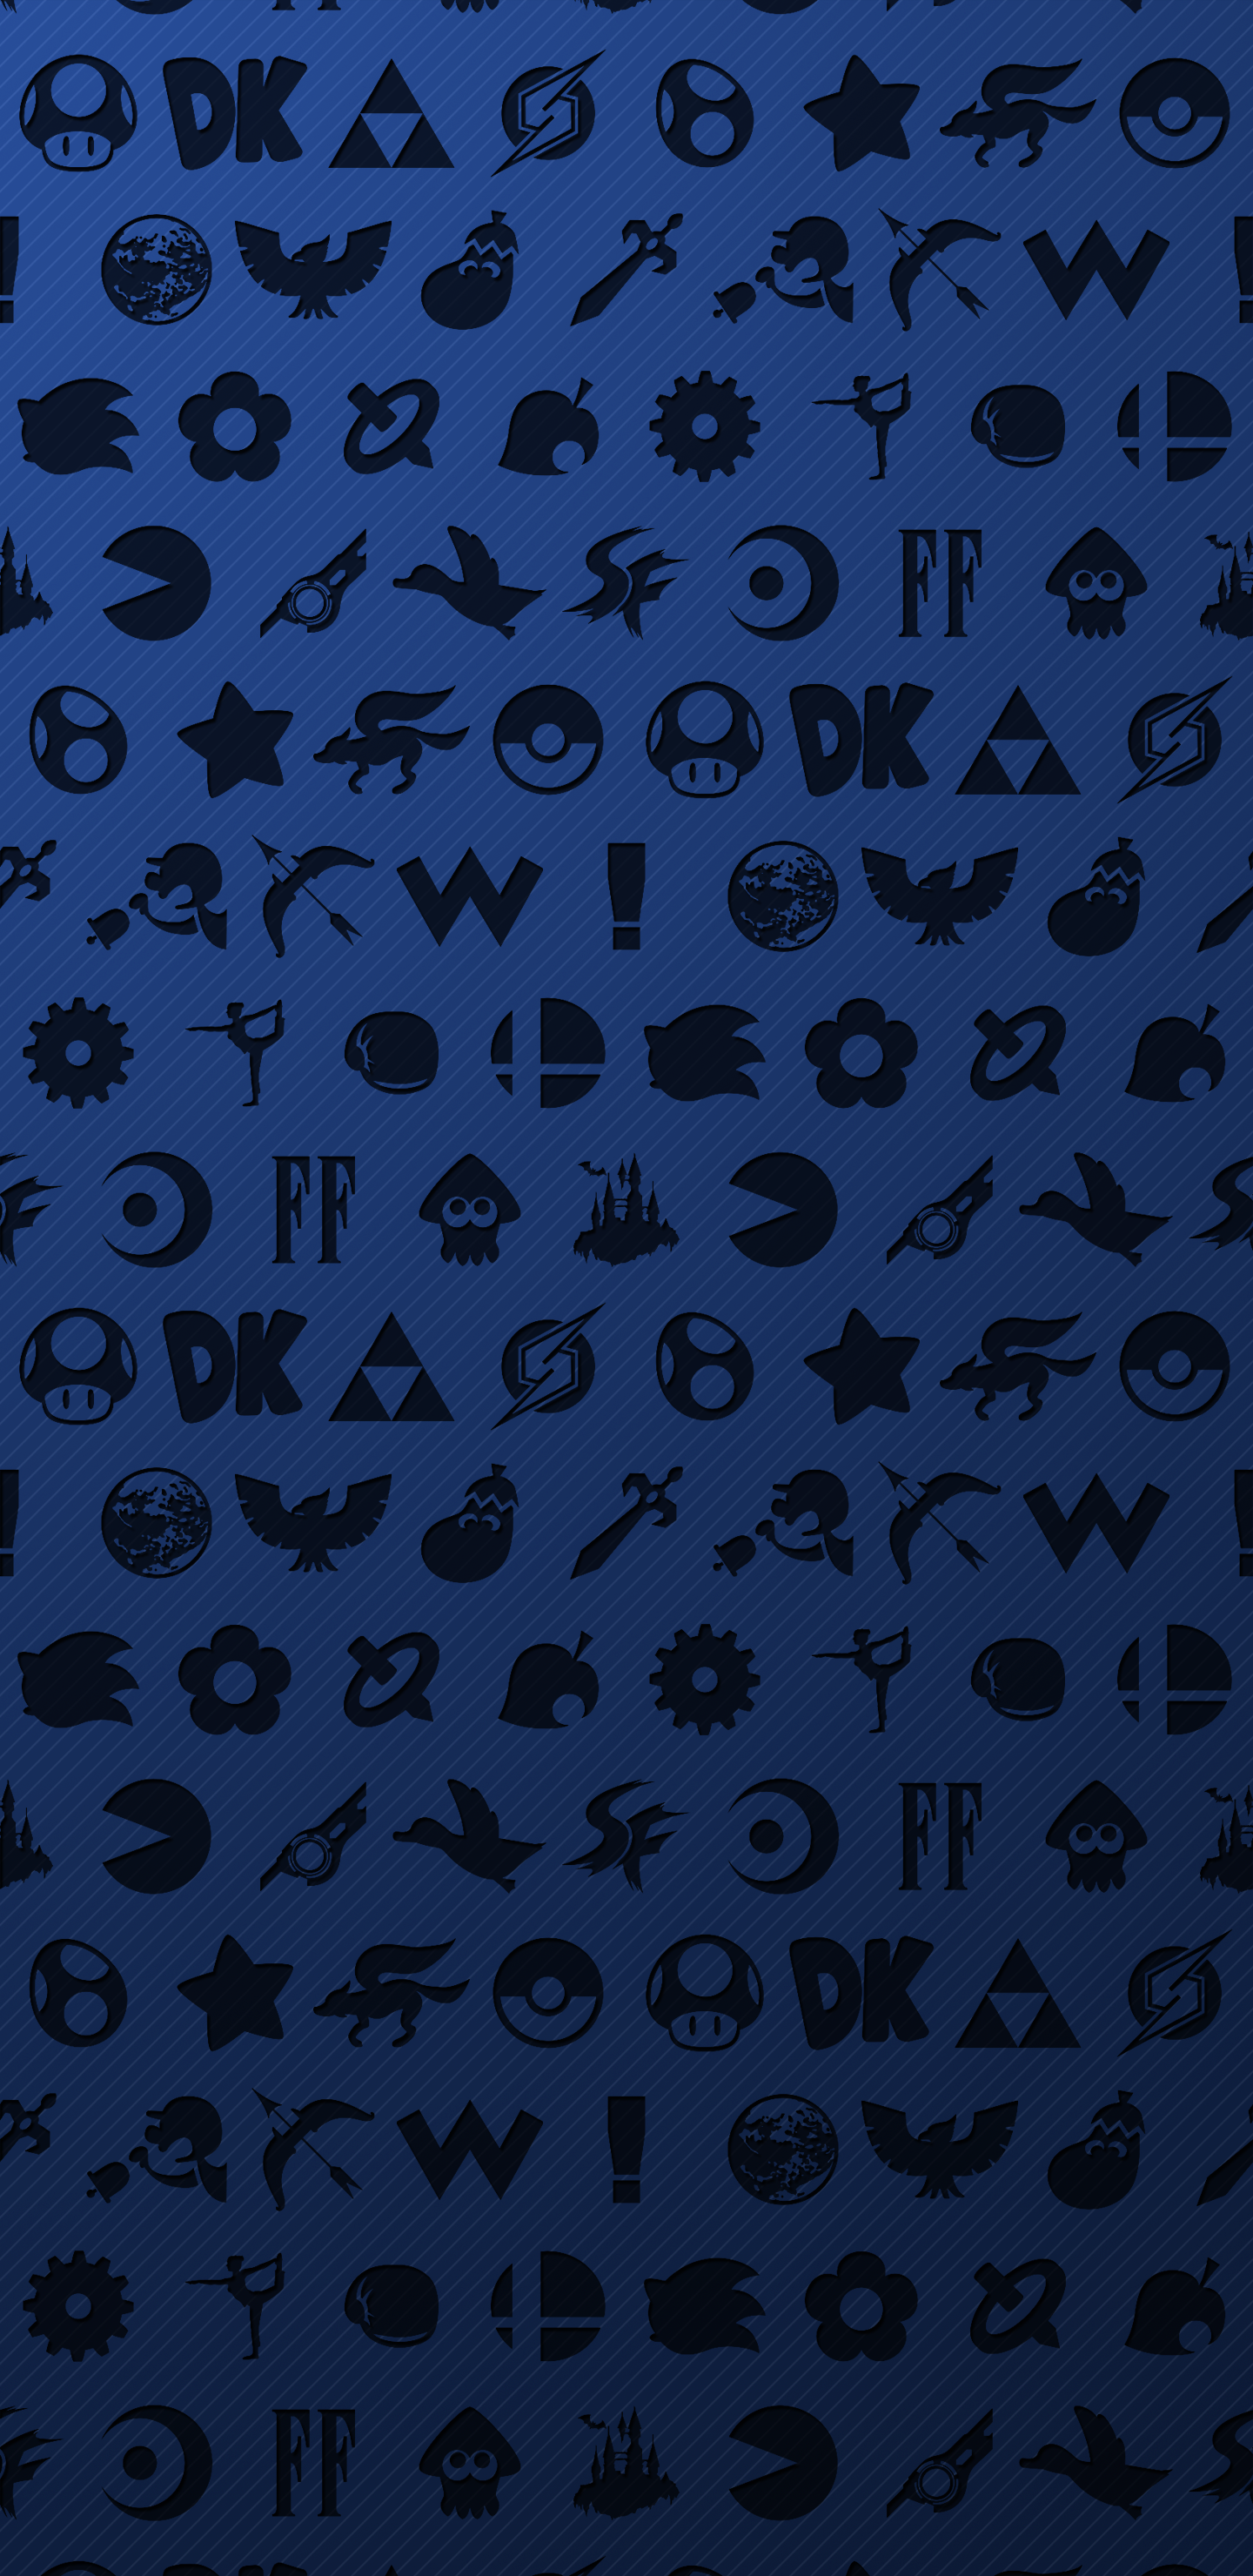 Smash Bros. Logos Wallpaper